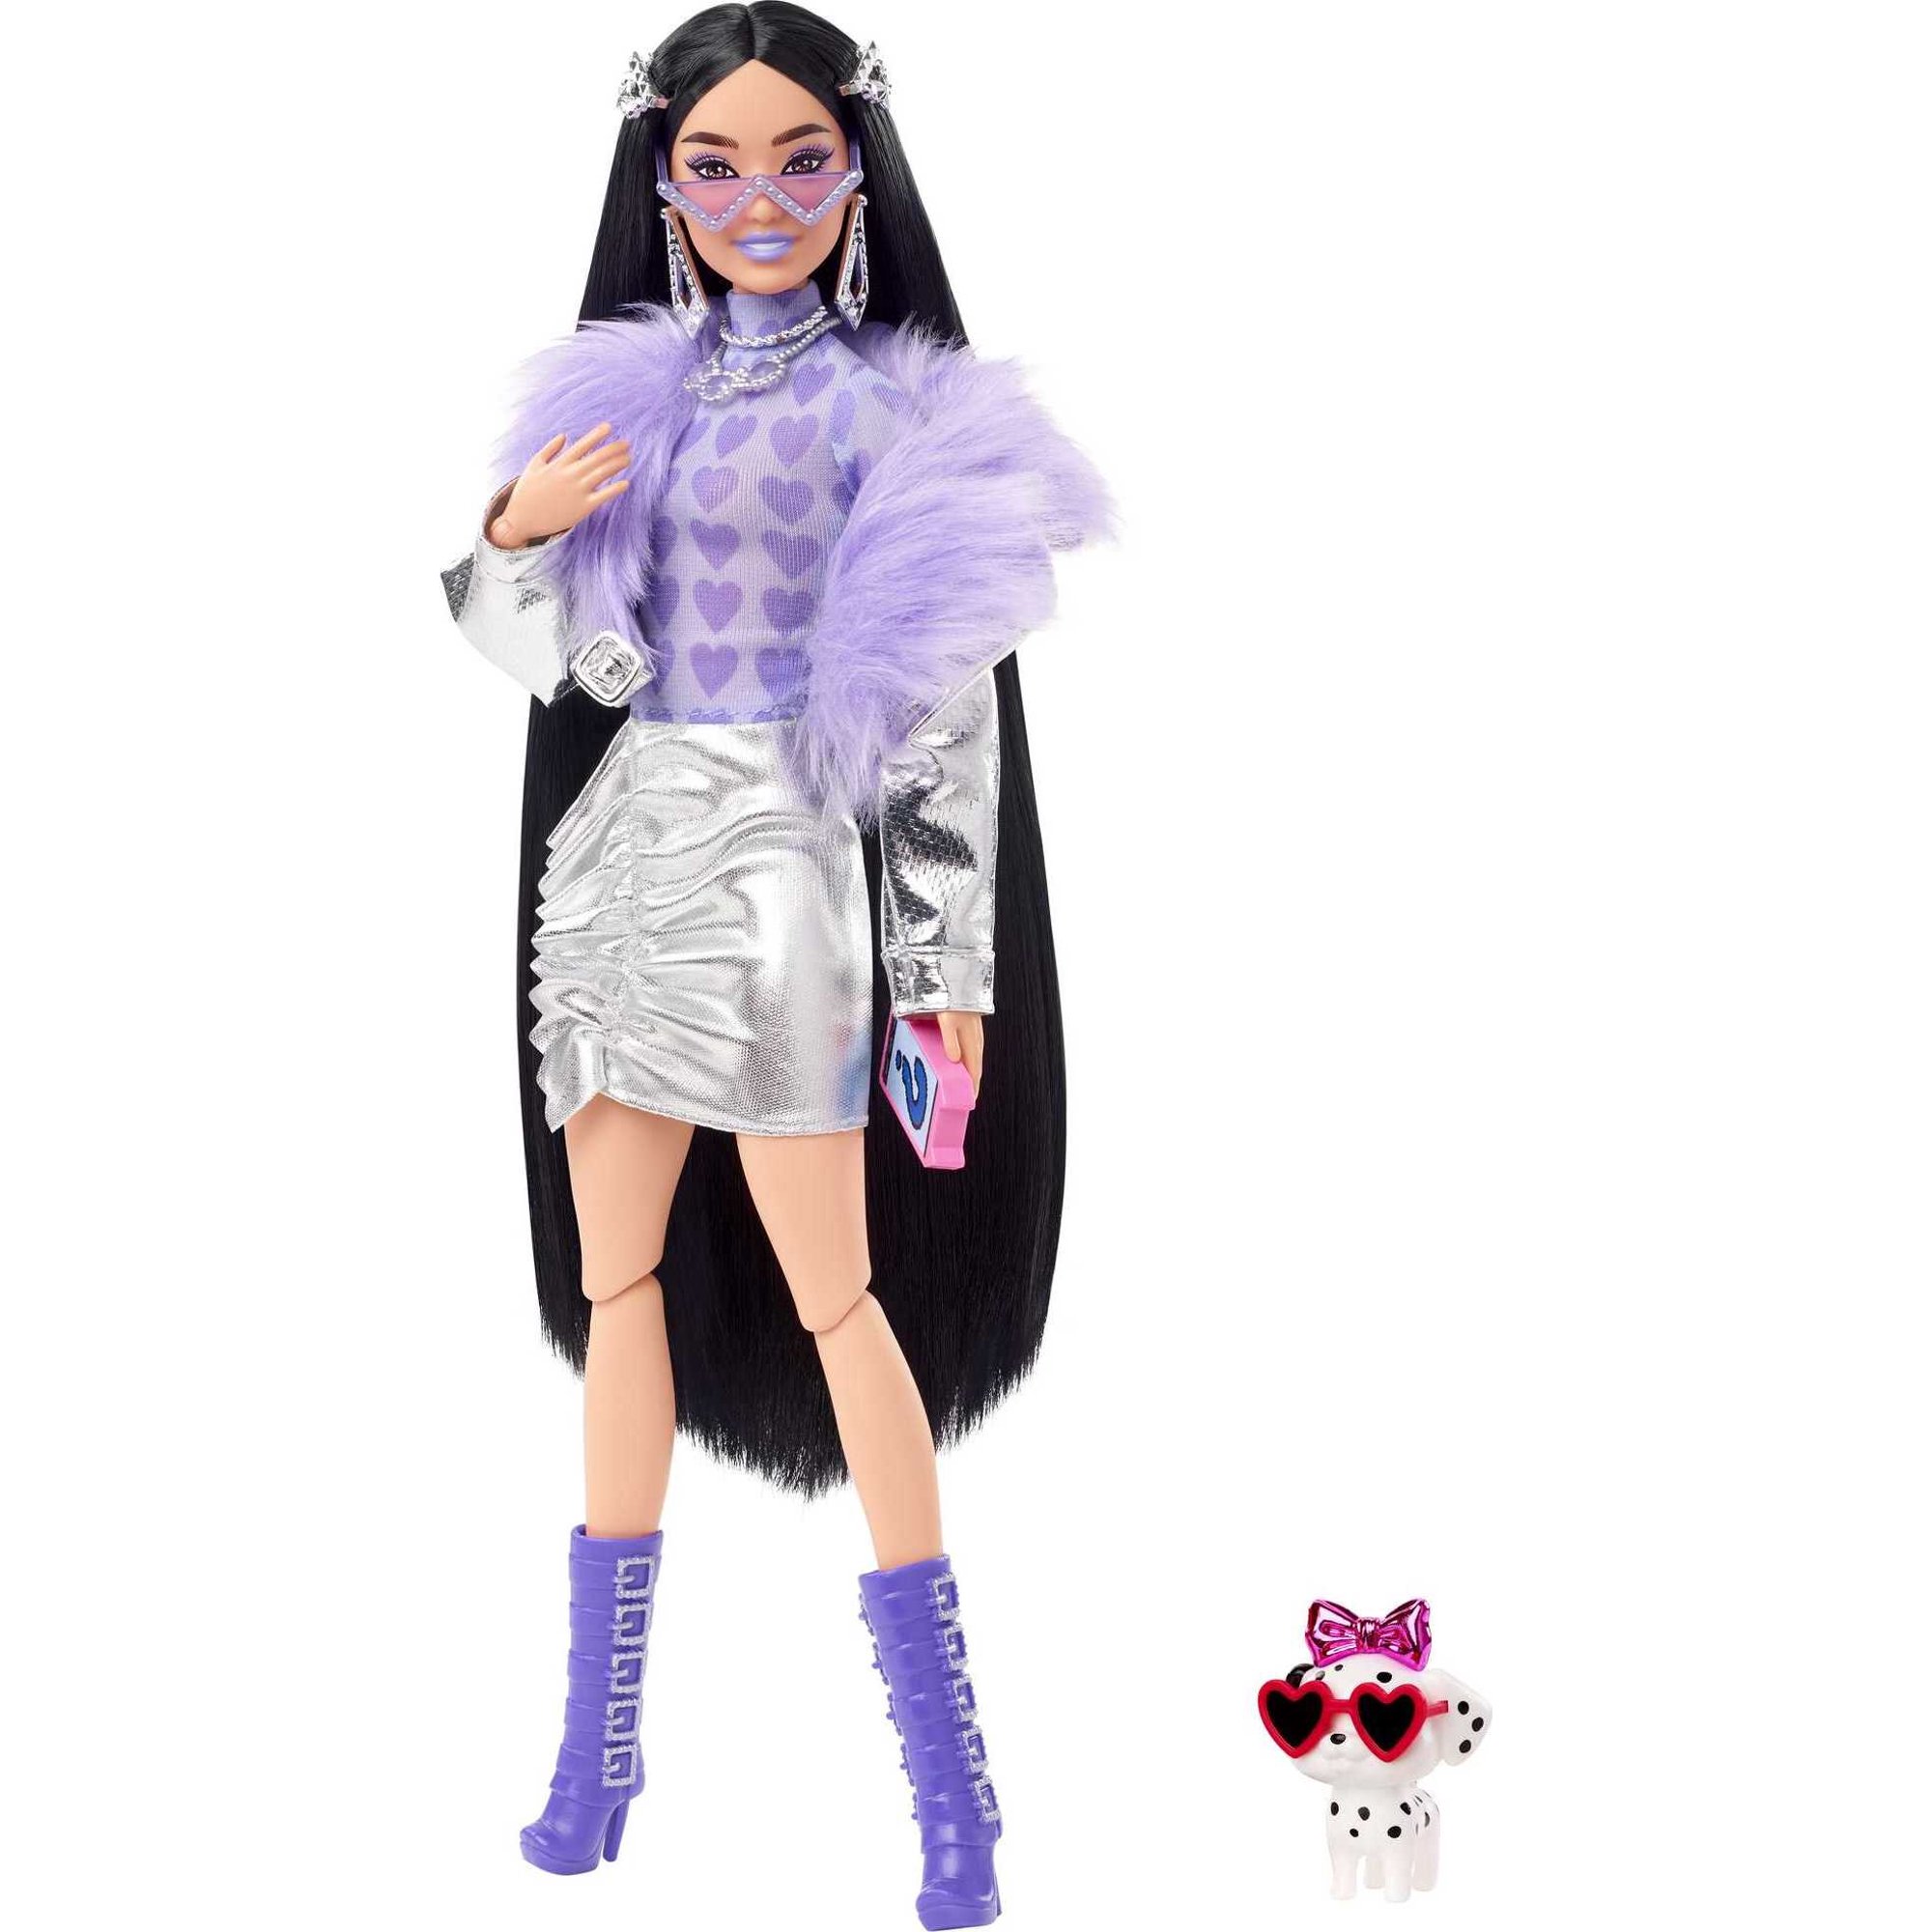 Barbie Extra Fashion Doll with Black Hair, Metallic Silver Jacket & Pet Dog #15